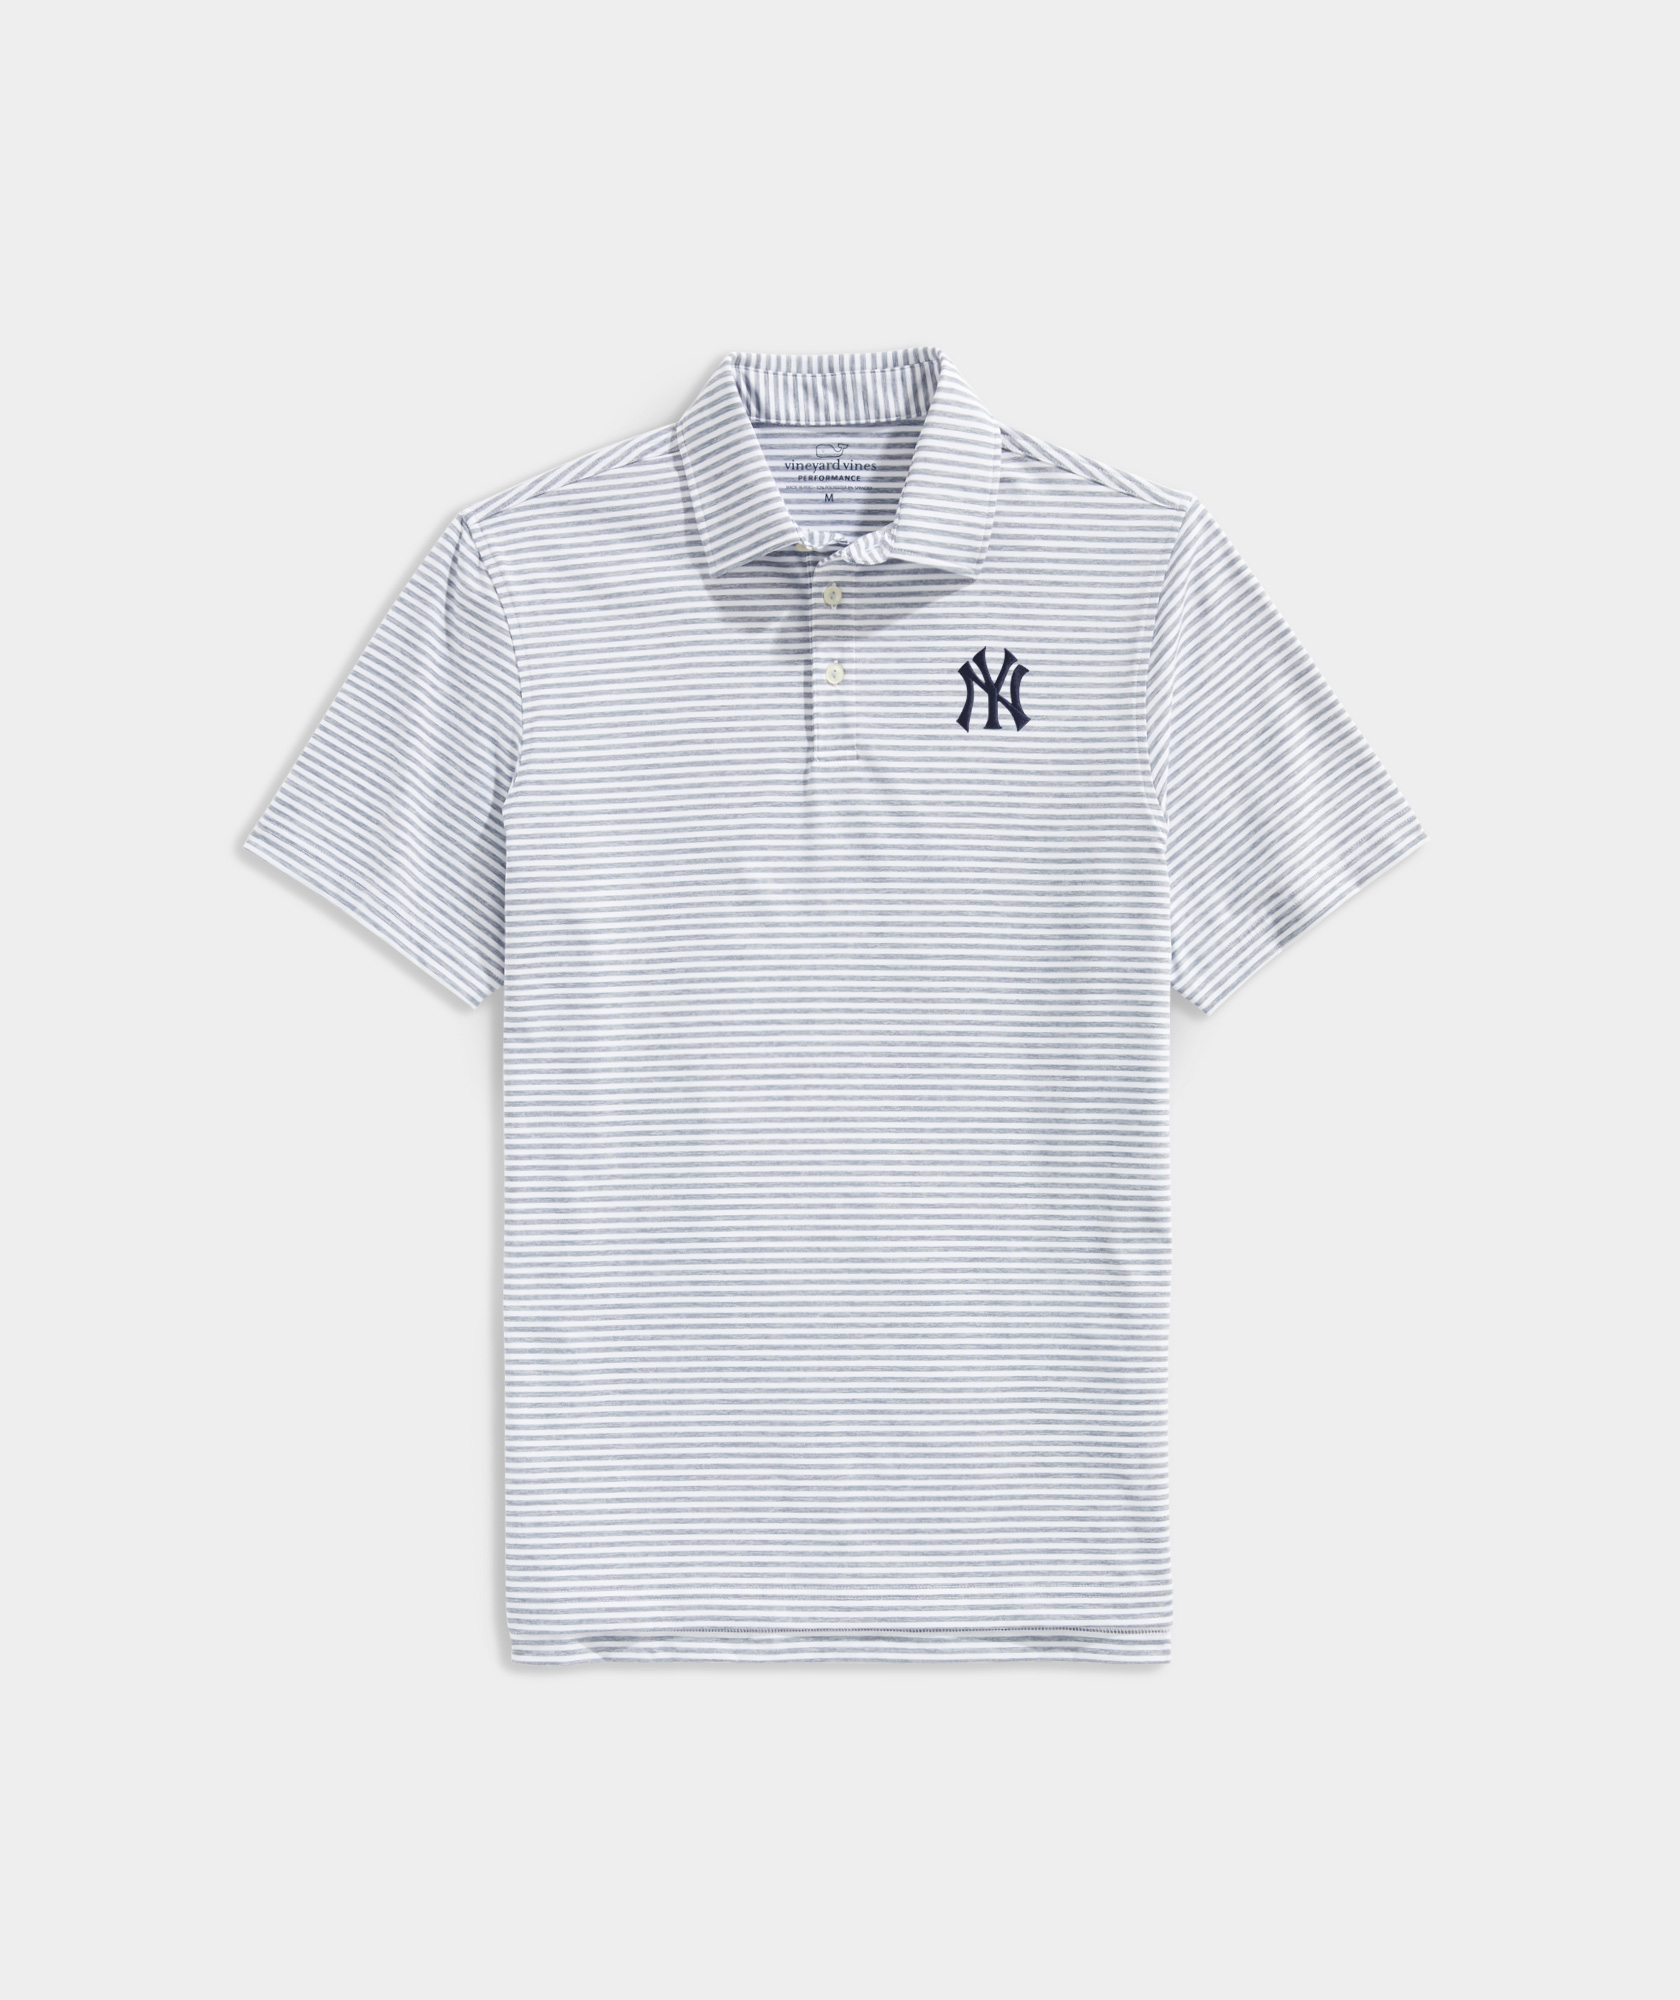 New York Yankees Polo Shirts